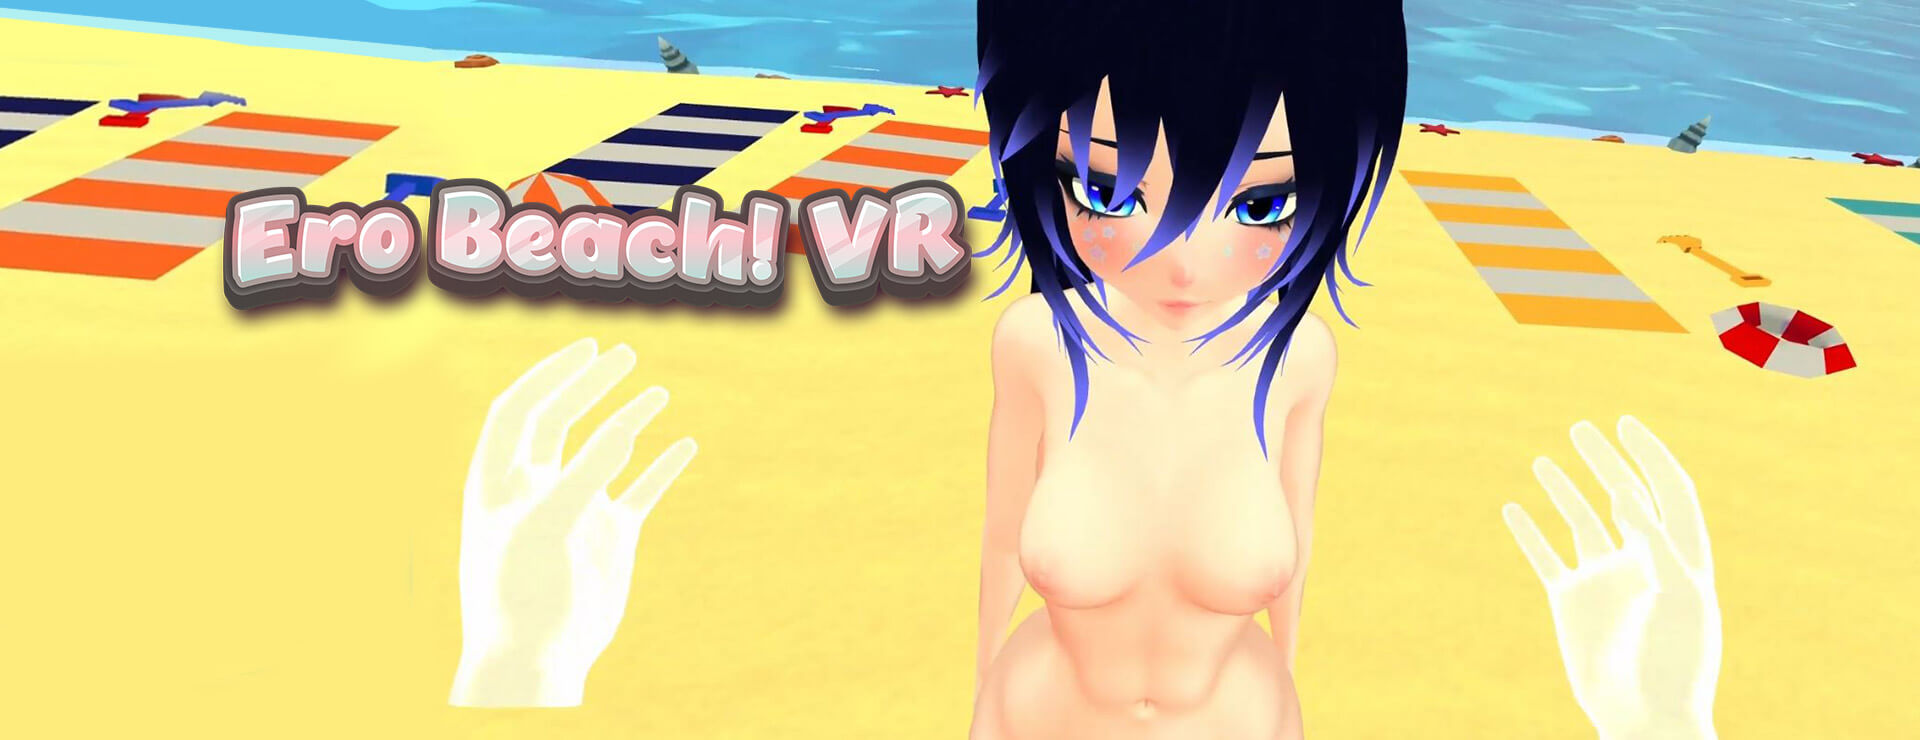 Ero Beach! VR - シミュレーション ゲーム